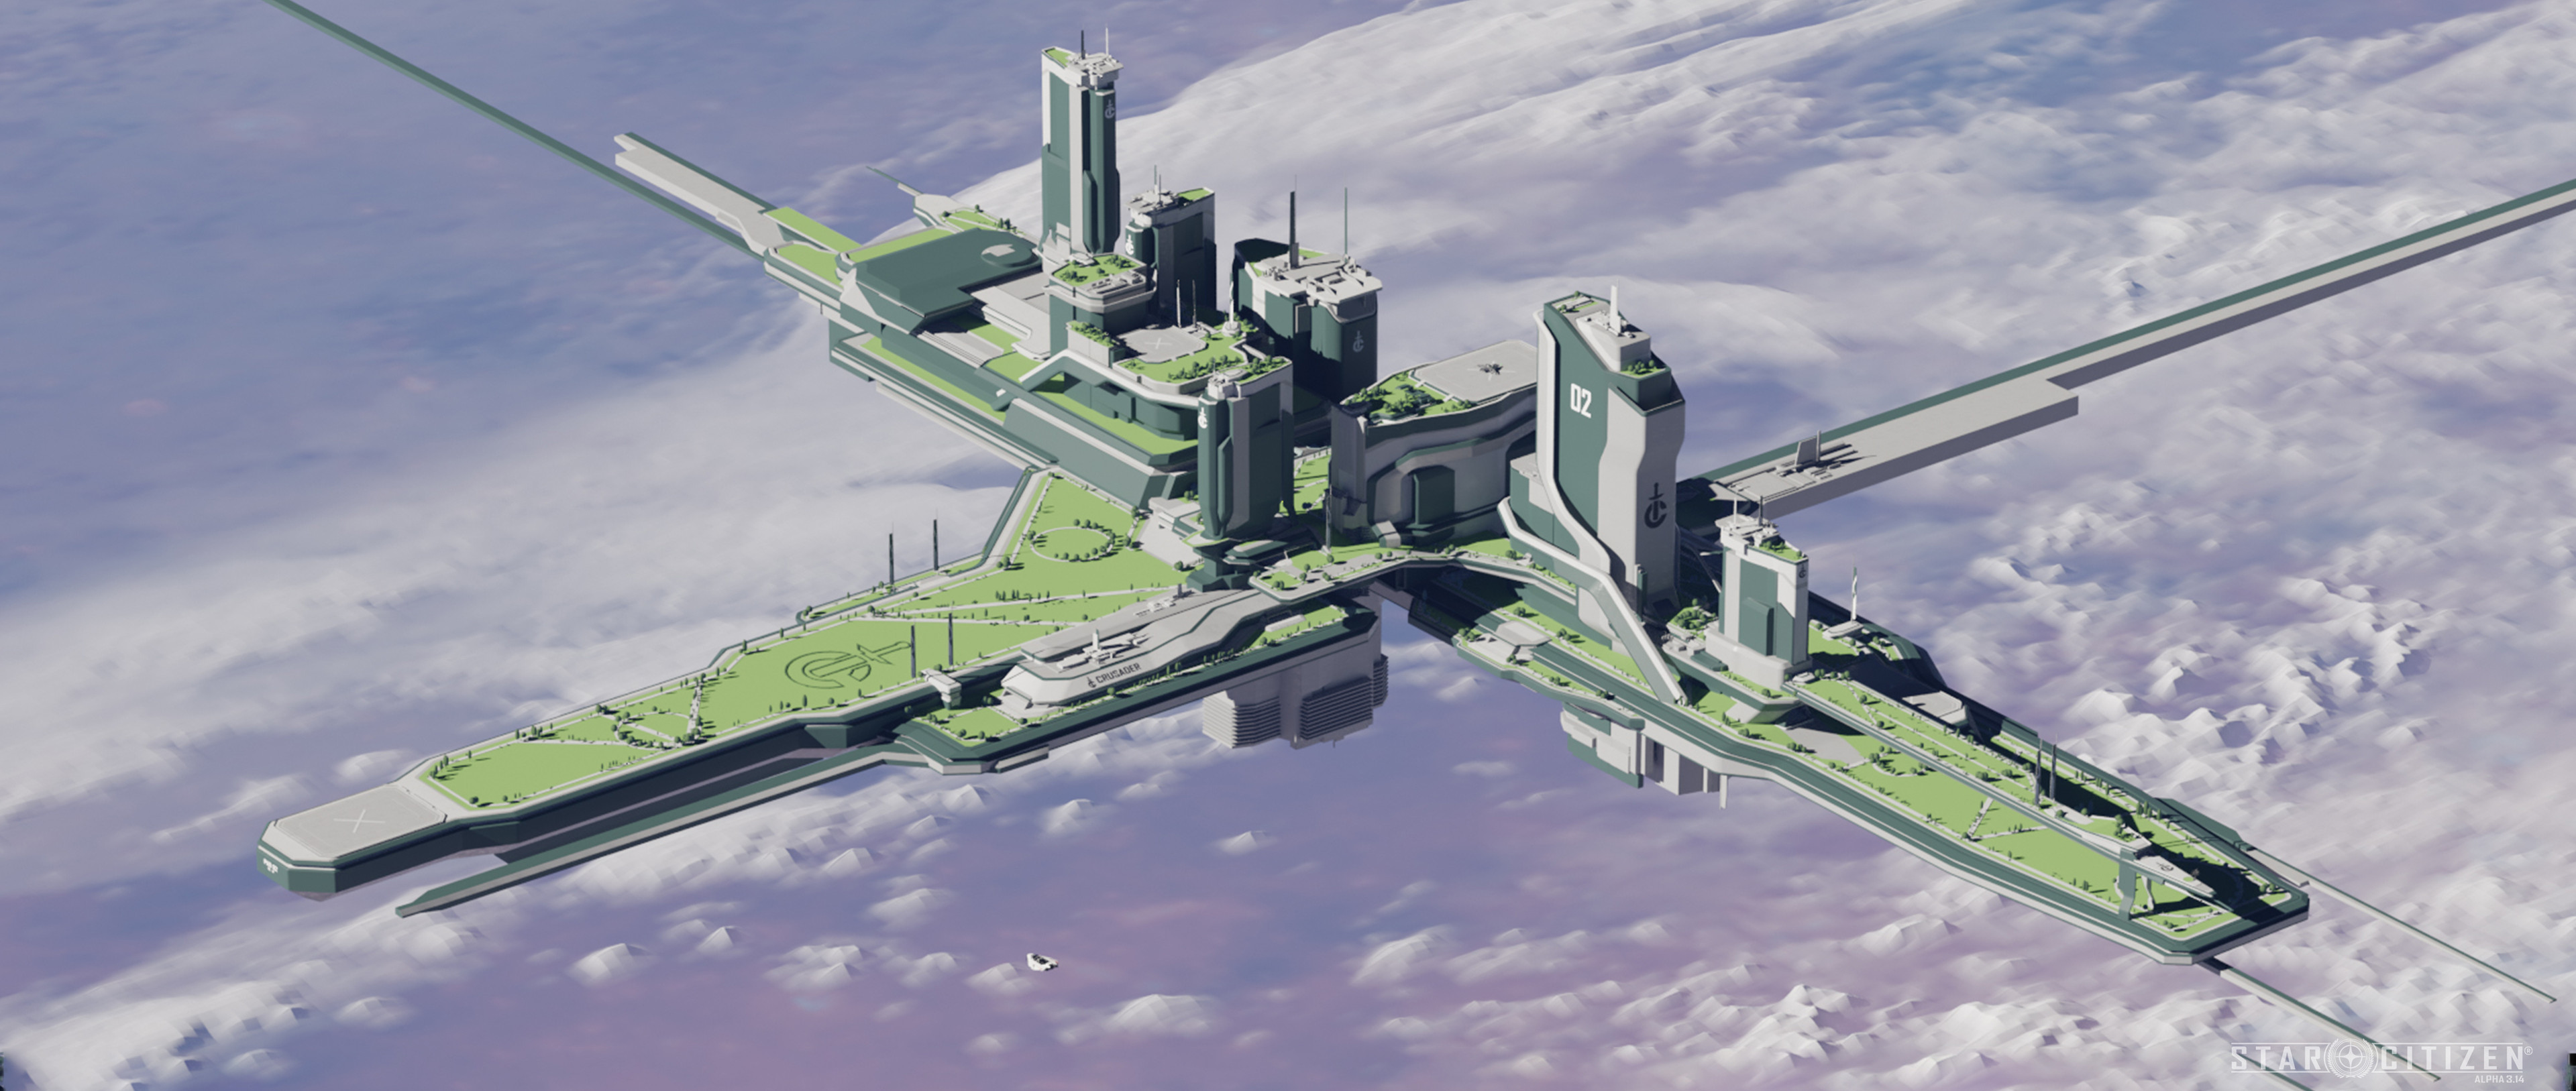 Habitation platform concept